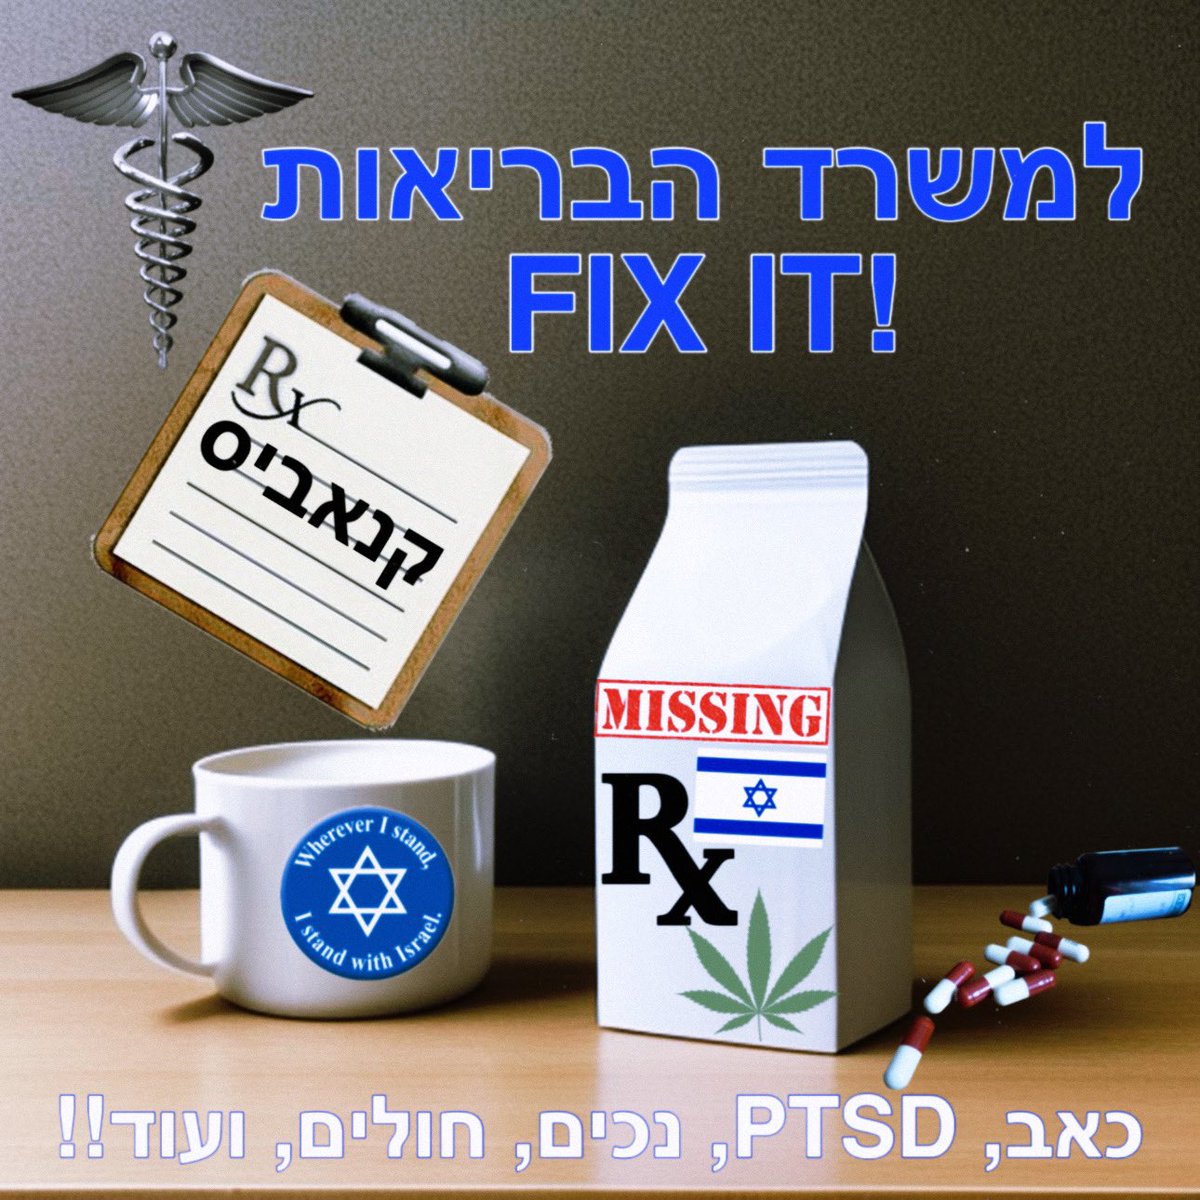 #israel #cannabis #reforms #safeaccess #donoharm #cbd @IsraelMOH #medicinal #harmreduction #shameonyou #corruption #patientsoverprofits #overregulated #freetheplants #ptsd #pain